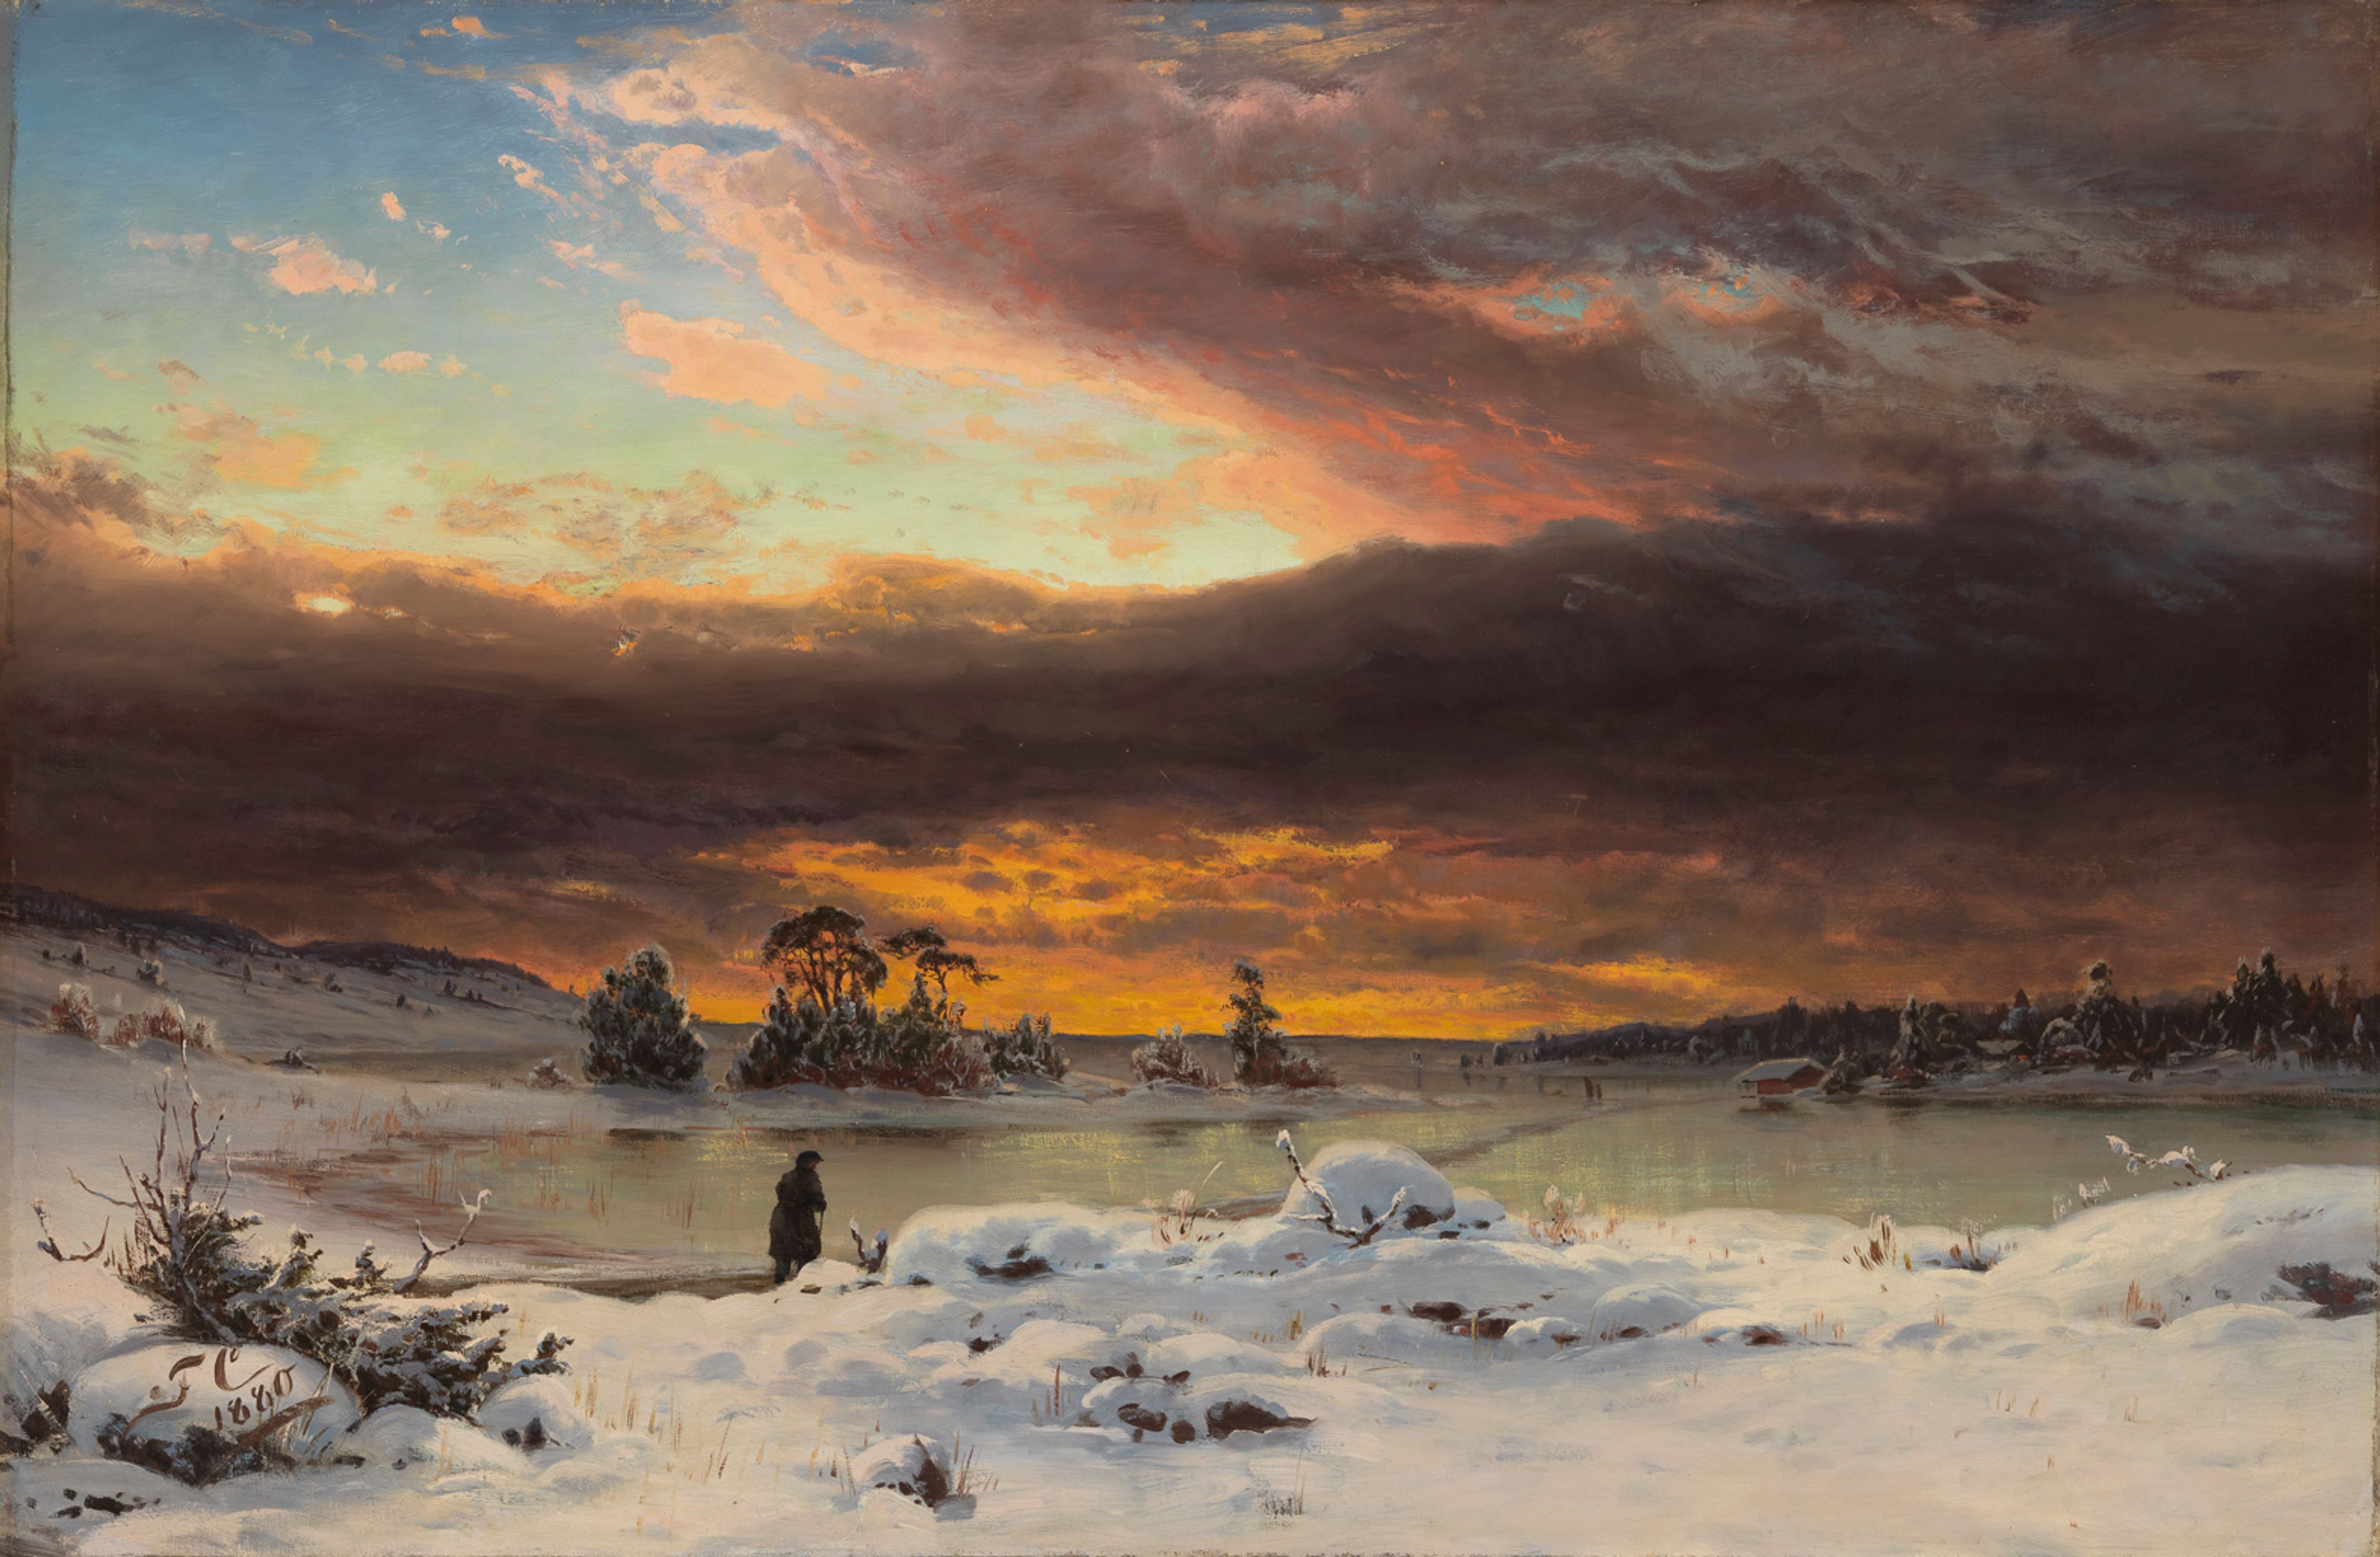 Winterlandschaft, Abendstimmung by Fanny Churberg - 1880 - 73,5 x 105 cm Finnish National Gallery